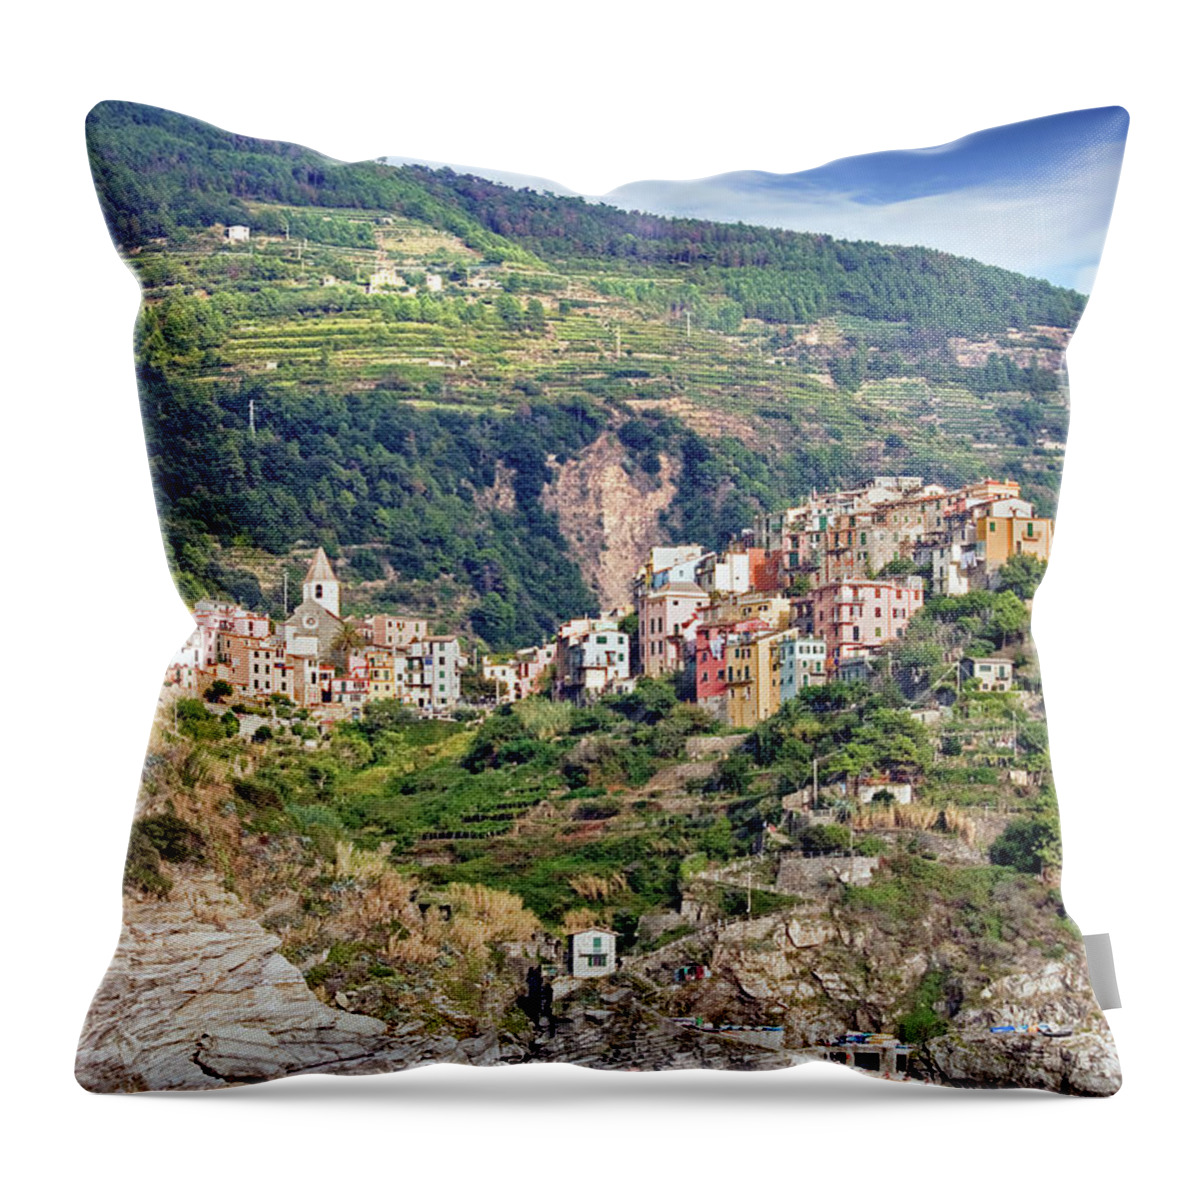 Built Structure Throw Pillow featuring the photograph Corniglia View by Ellen Van Bodegom